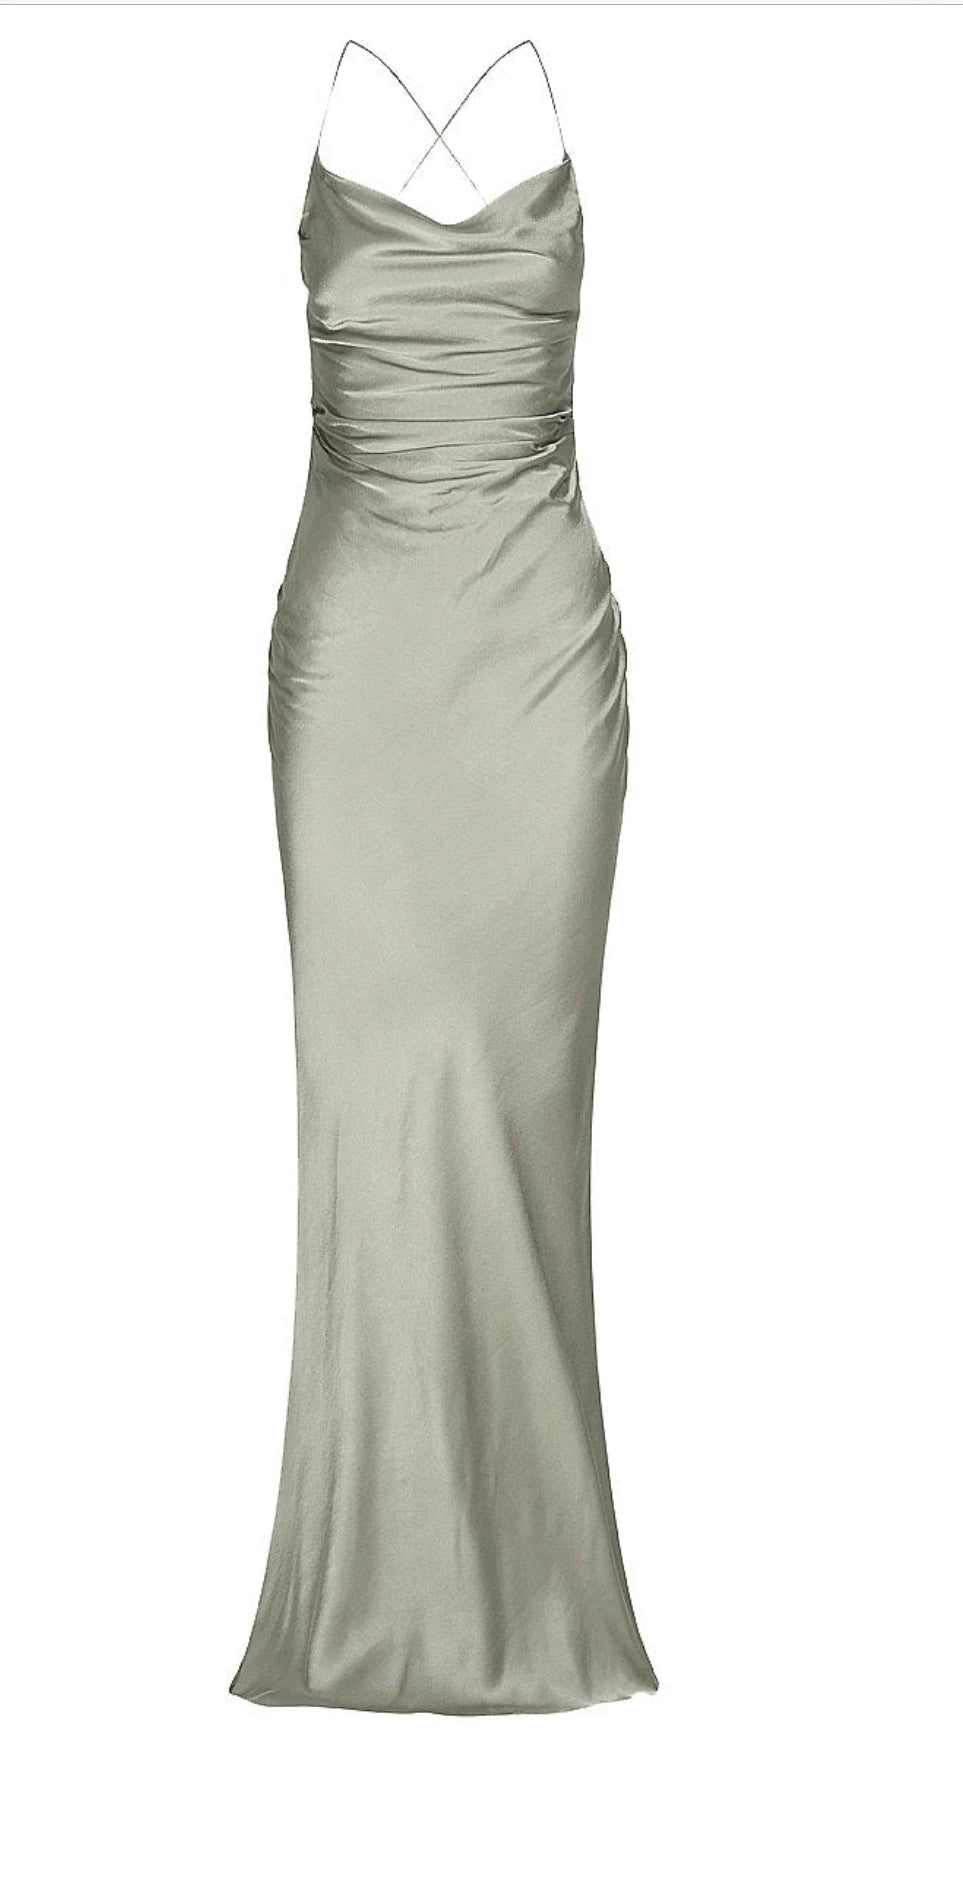 Shona Joy La Lune Lace Back Maxi Dress size 8